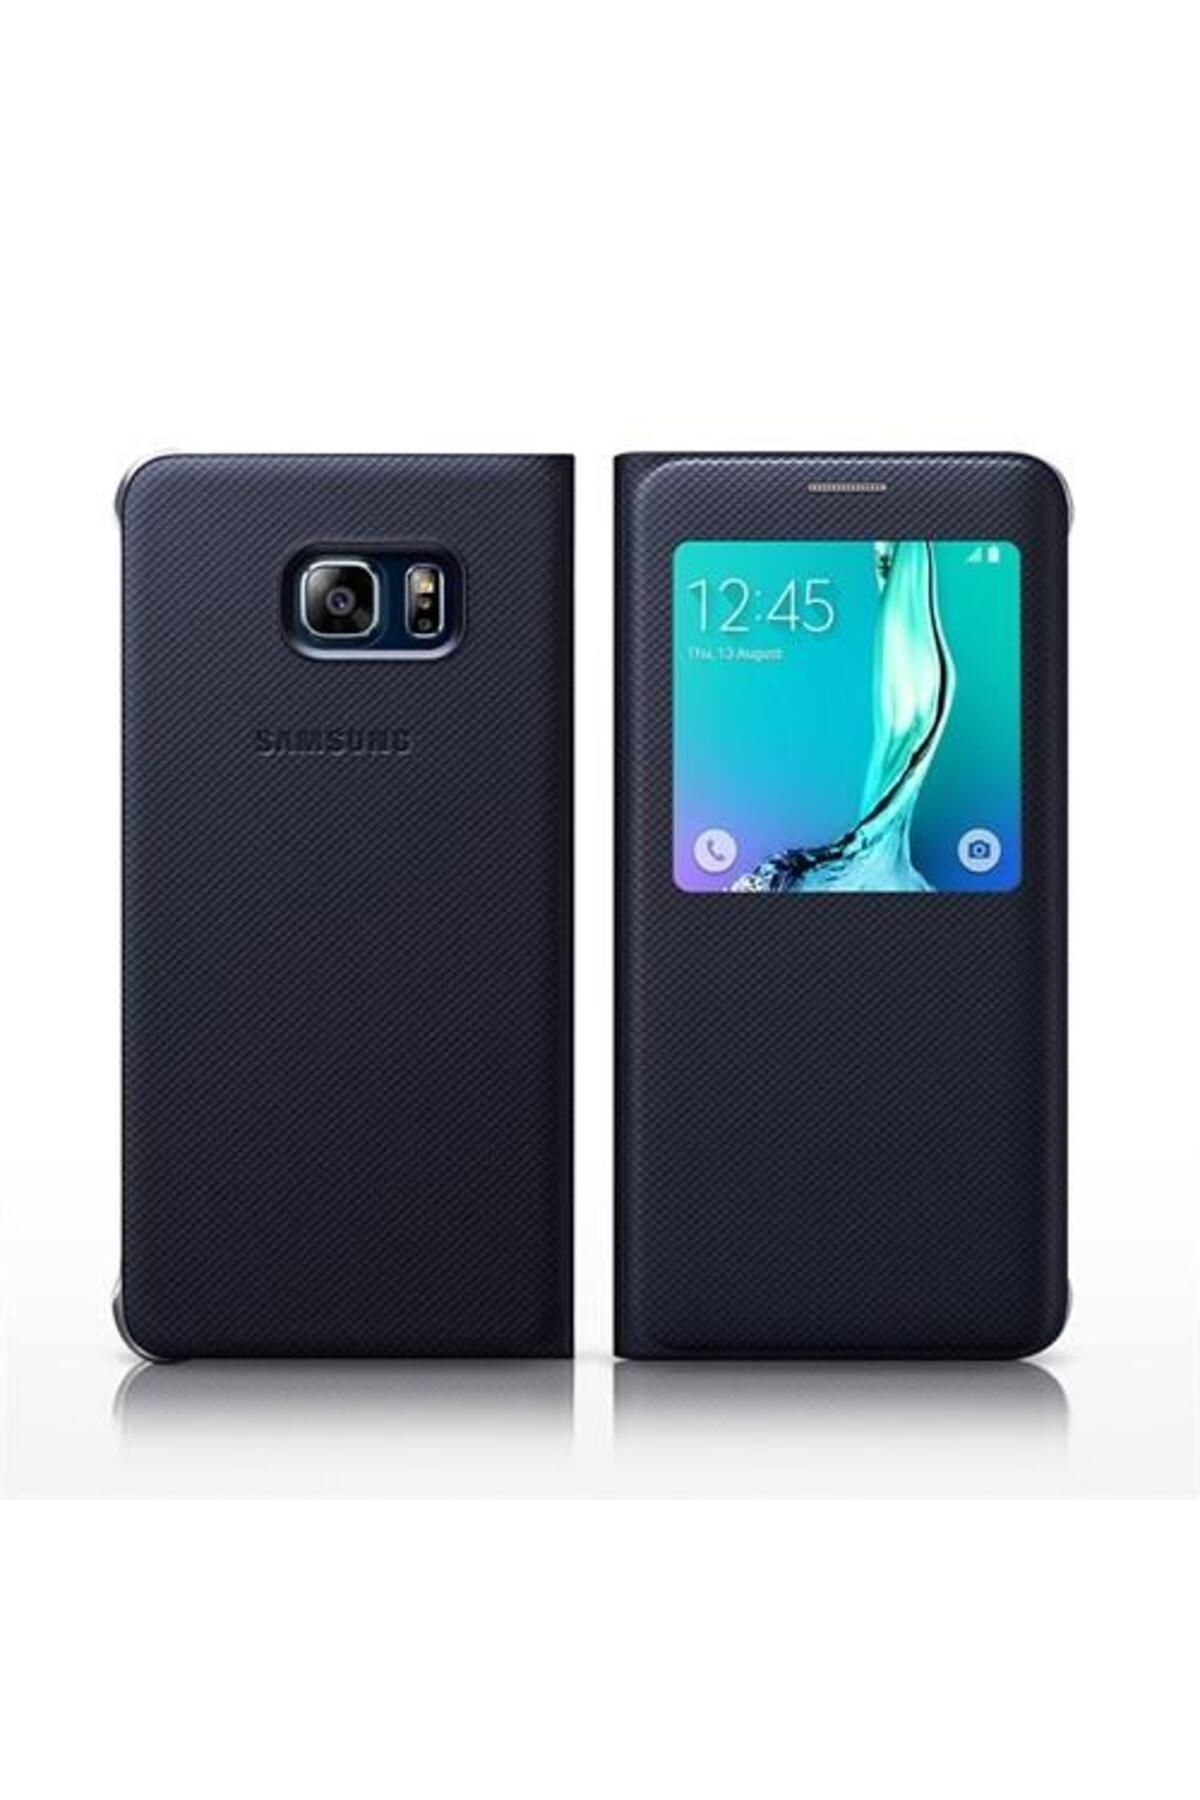 Samsung Galaxy S6 Edge Plus Kılıf S View Cover Ef-cg928pbegtr Lacivert